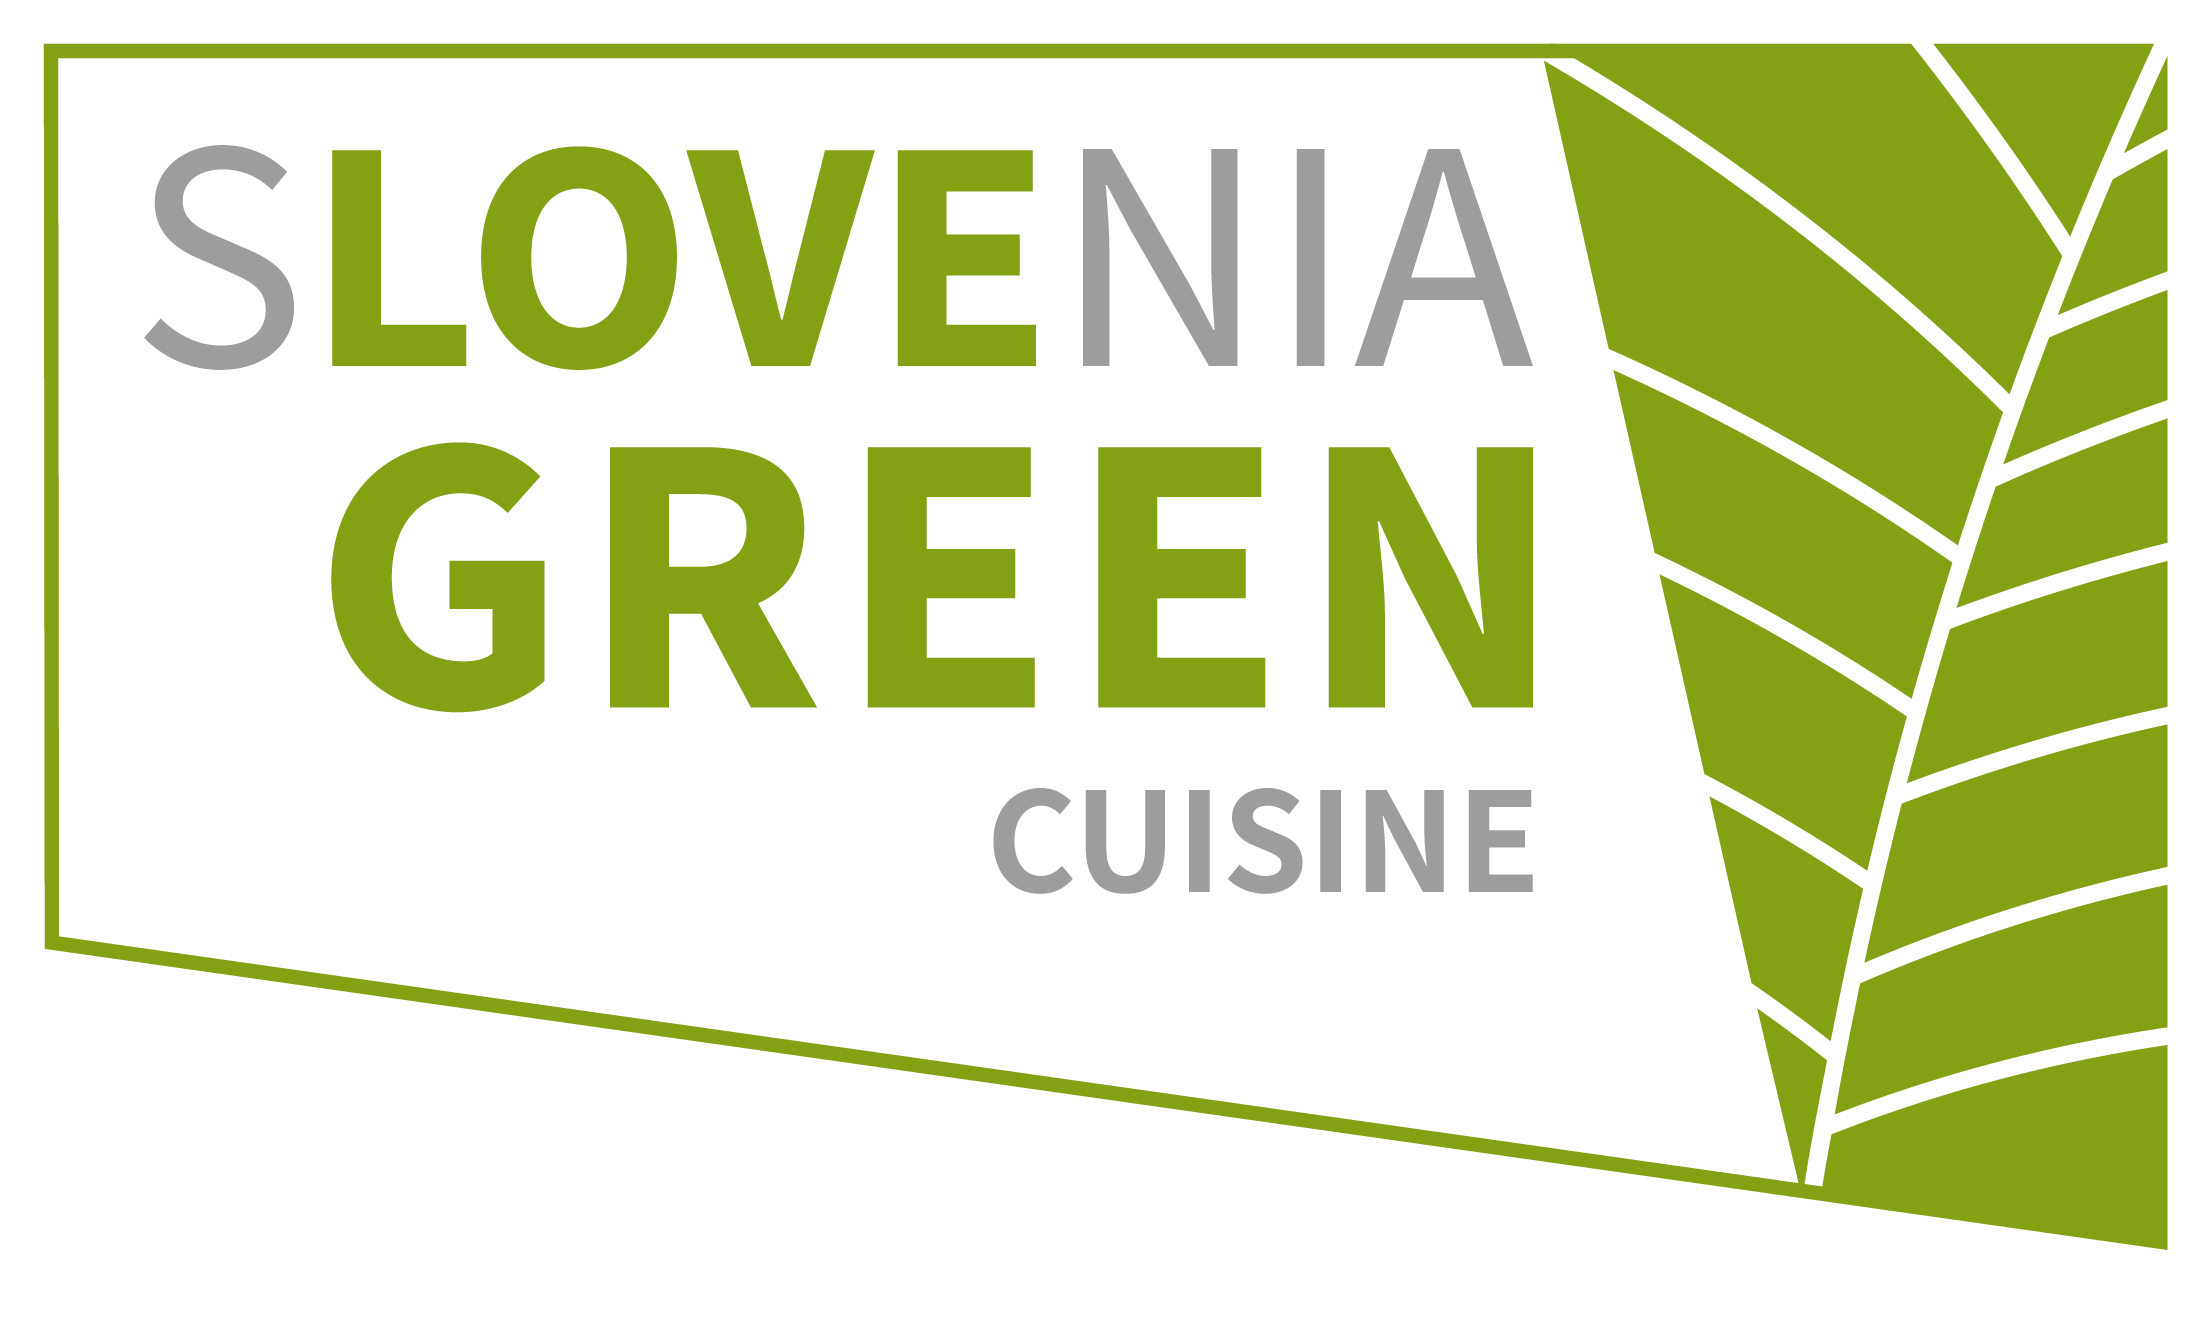 sto logo slovenia green cusine-02